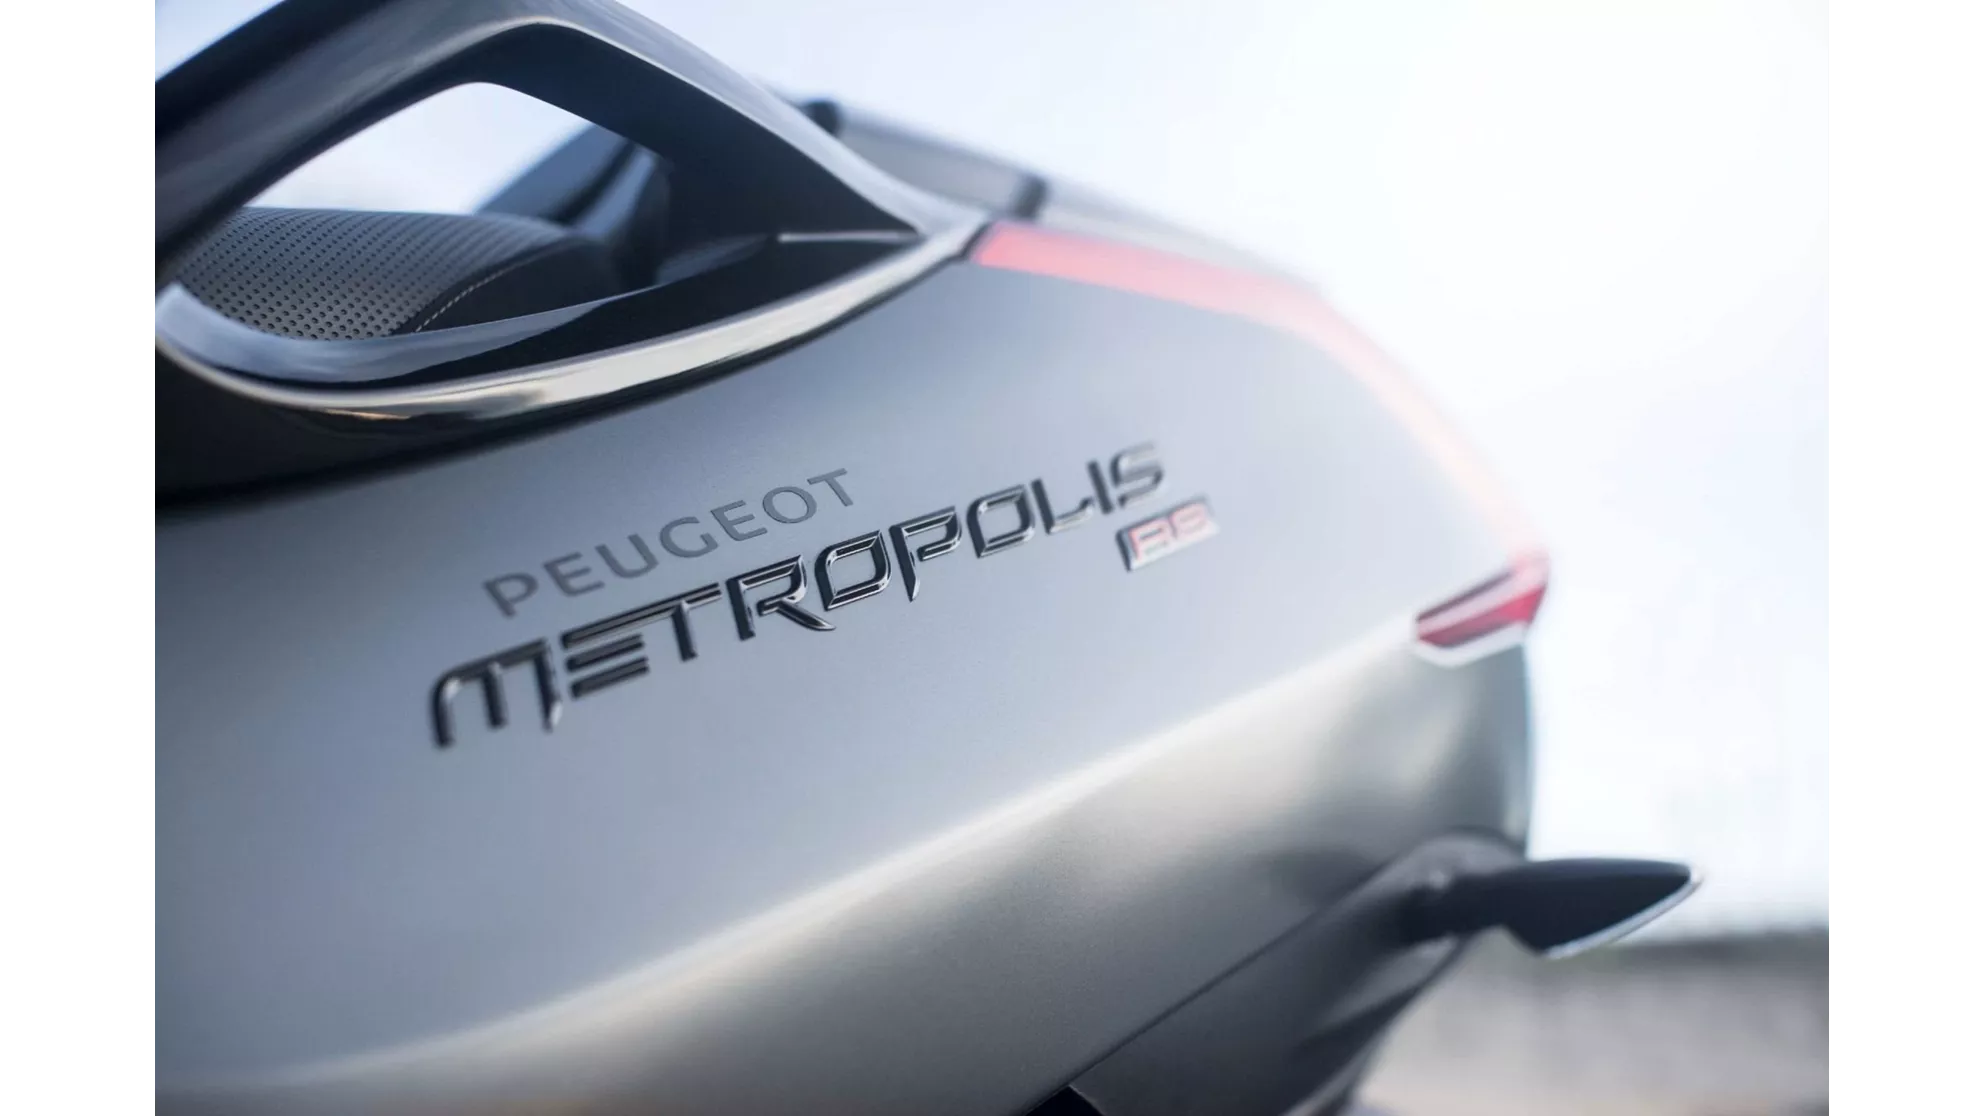 Peugeot Metropolis 400i RS - Immagine 22